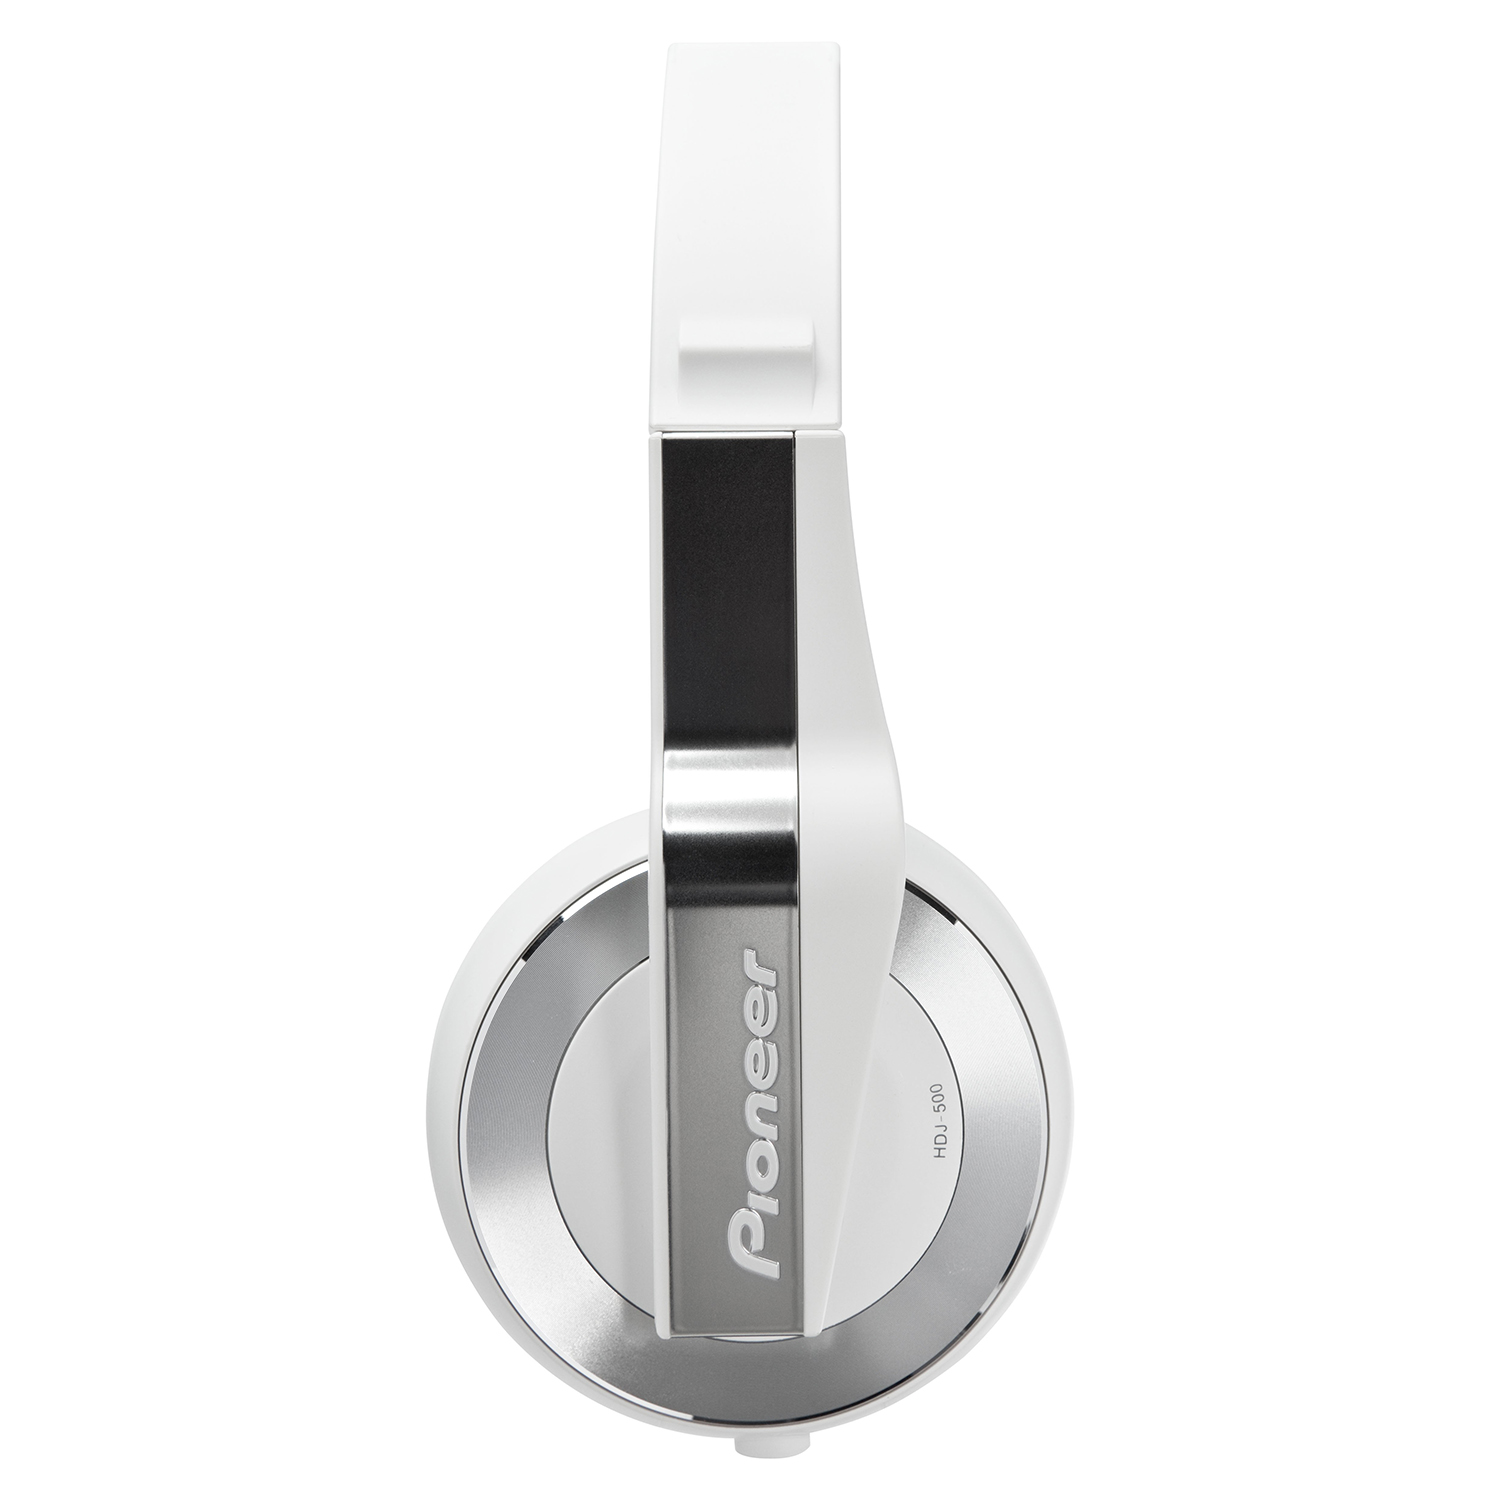 Cascos DJ HDJ-500 - Color blanco + Adaptador auriculares 3,5 mm/ - MercaOlé